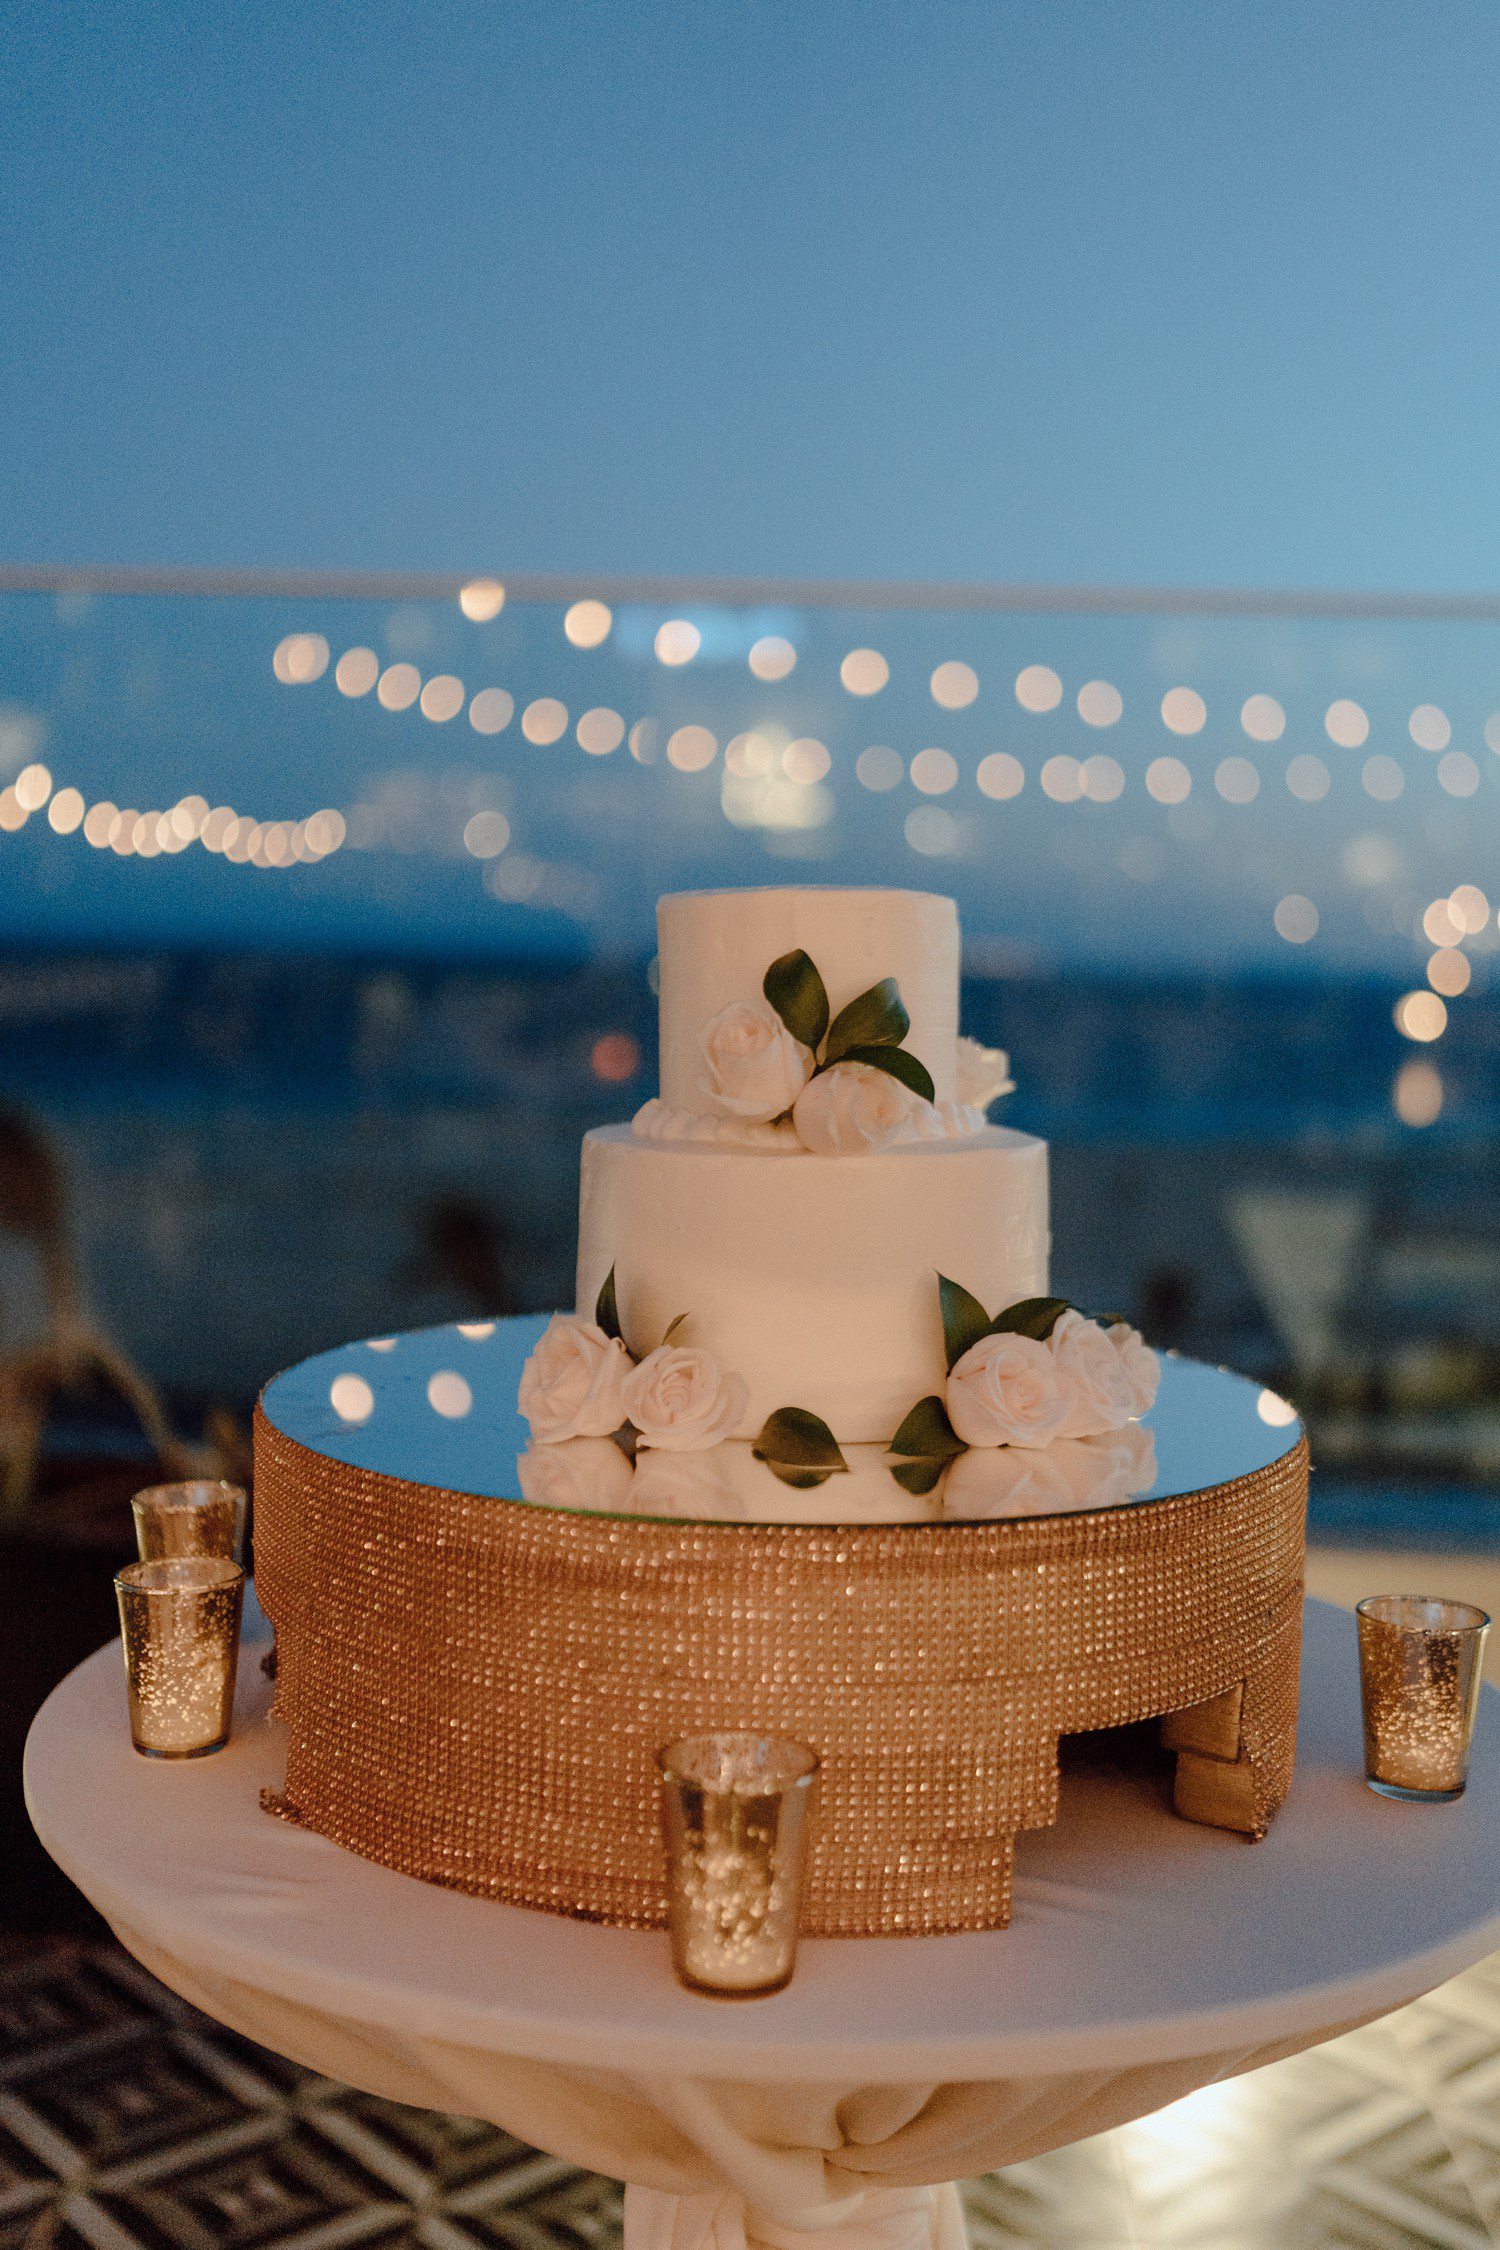 White wedding cake with decorative flowers. 